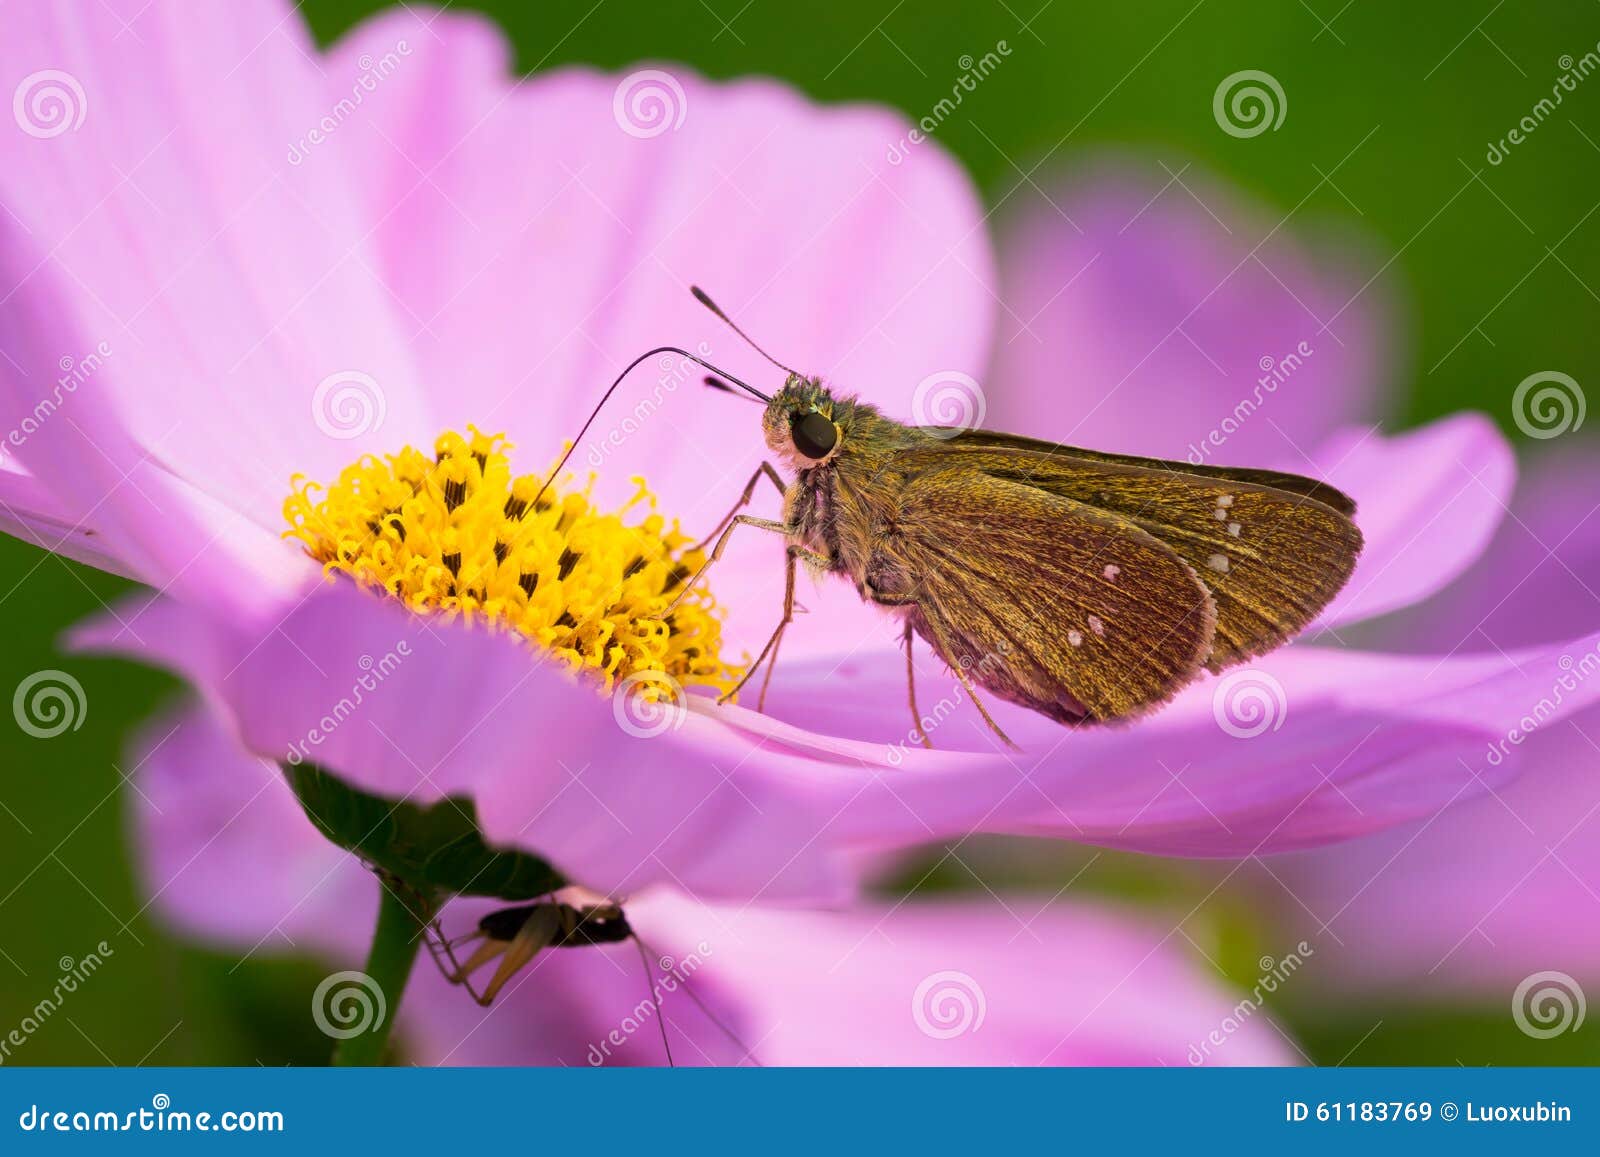 Moth on daisy